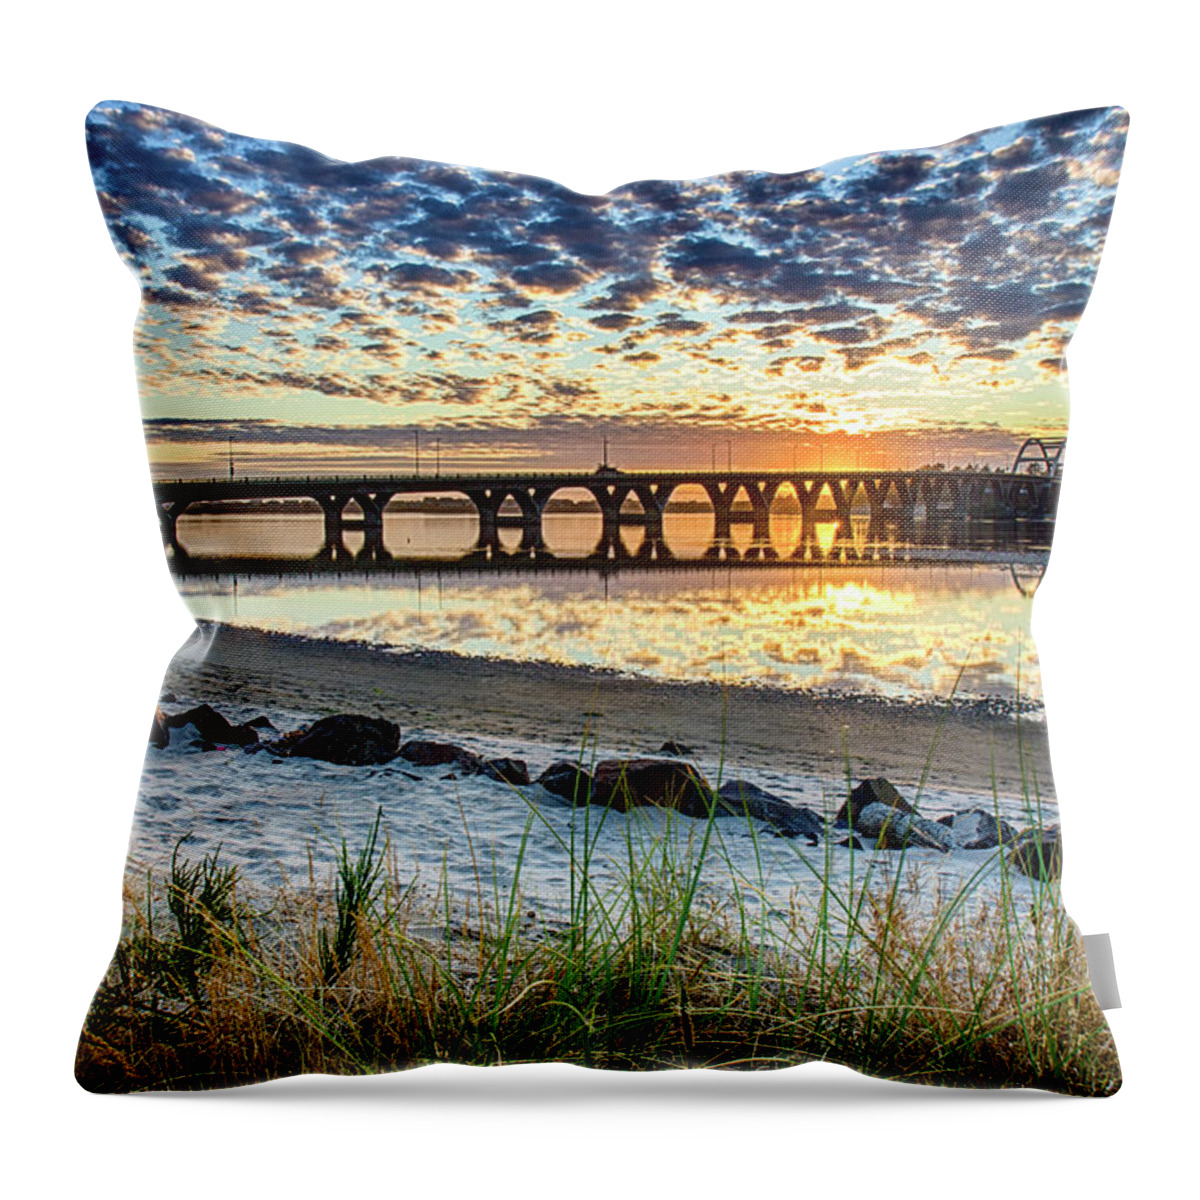 Waldport Oregon Throw Pillow featuring the photograph Alsea Bay Bridge Waldport Oregon by Donald Pash